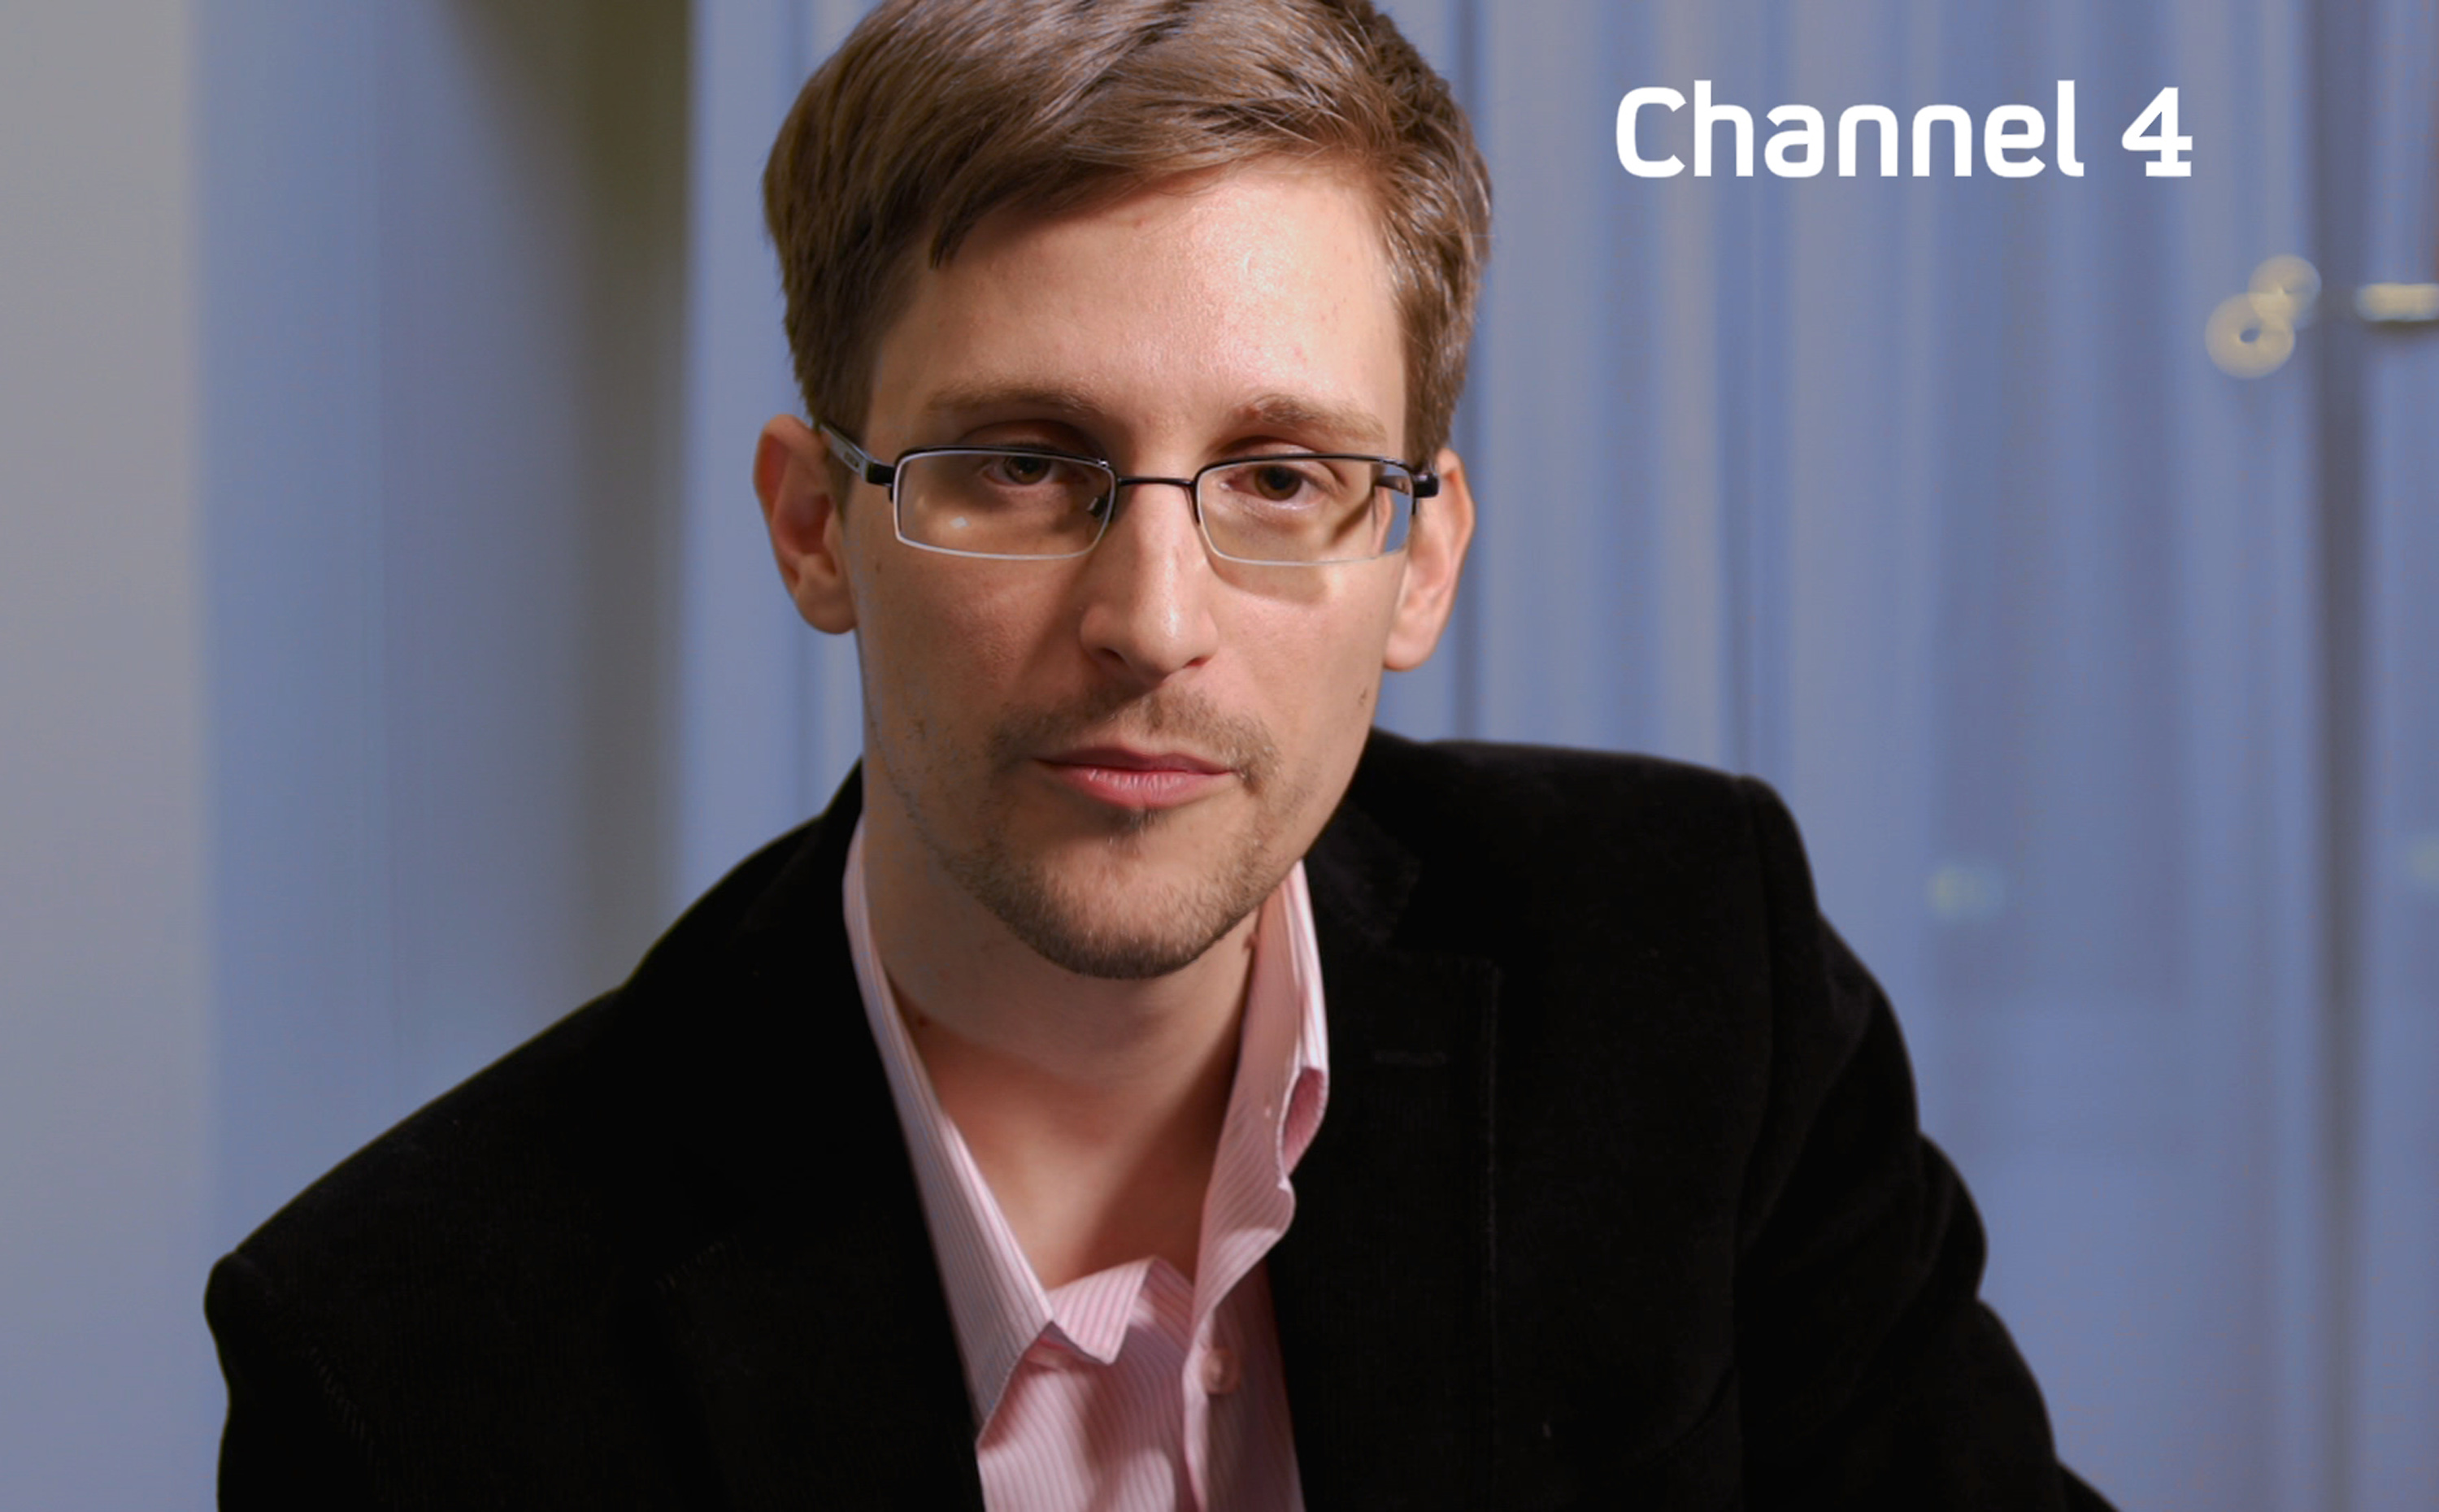 US intelligence leaker Edward Snowden. Photo: AFP/CHANNEL 4